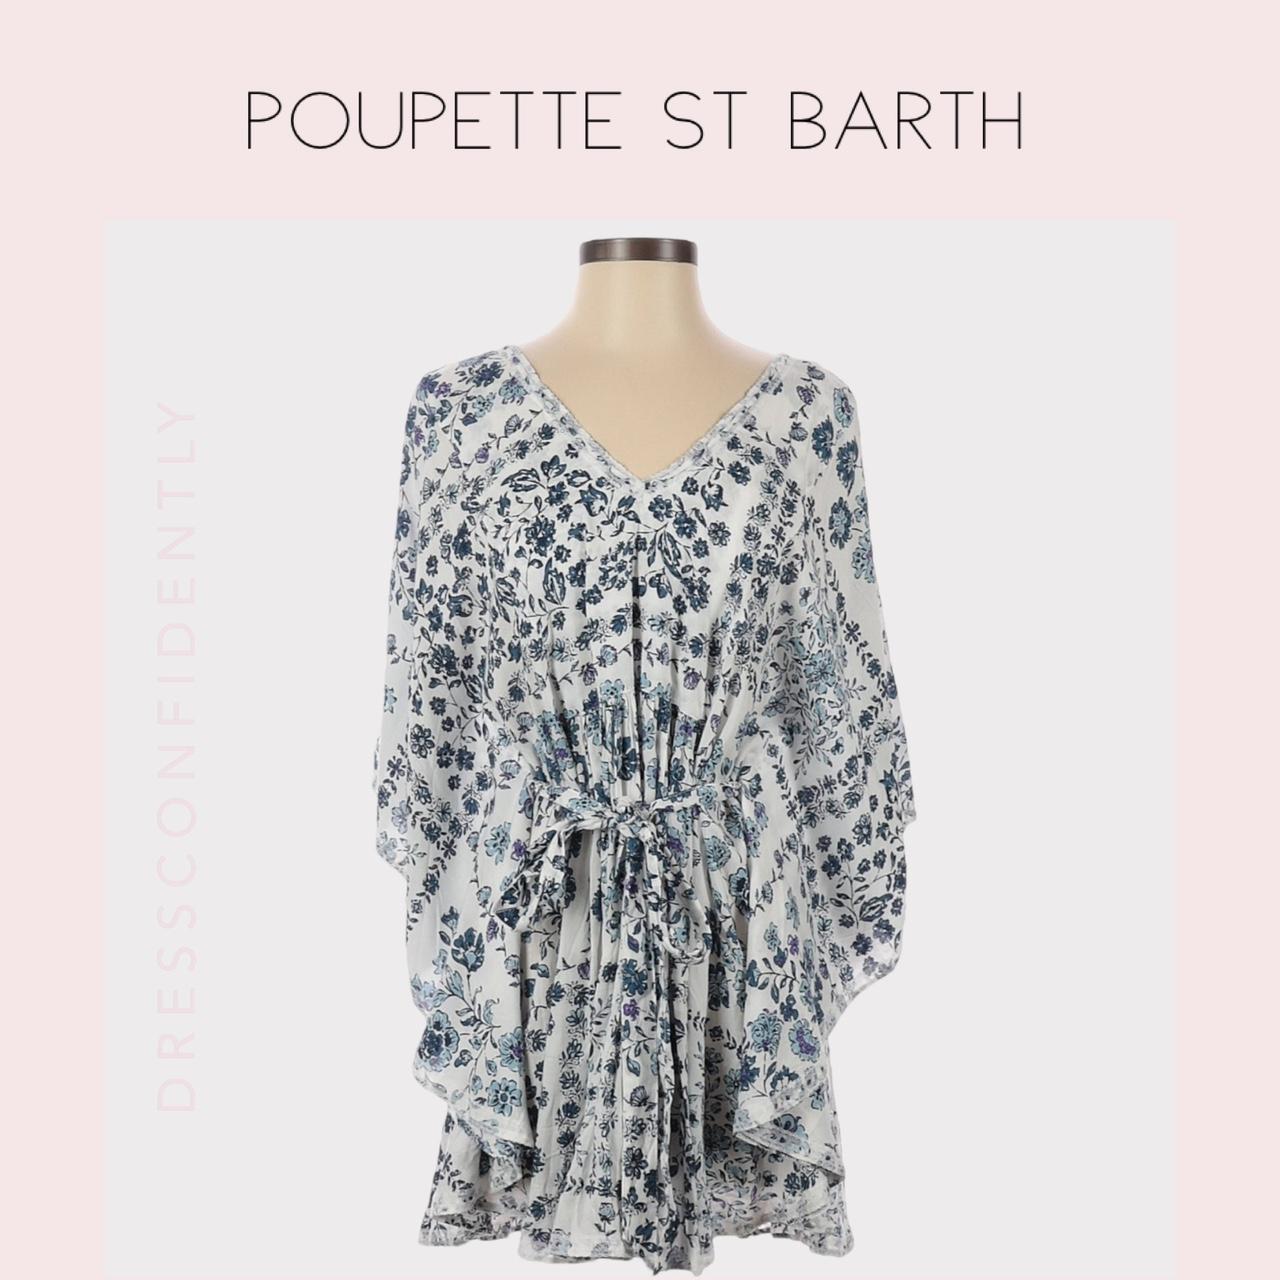 Poupette St Barth Women's Blue and White Dress